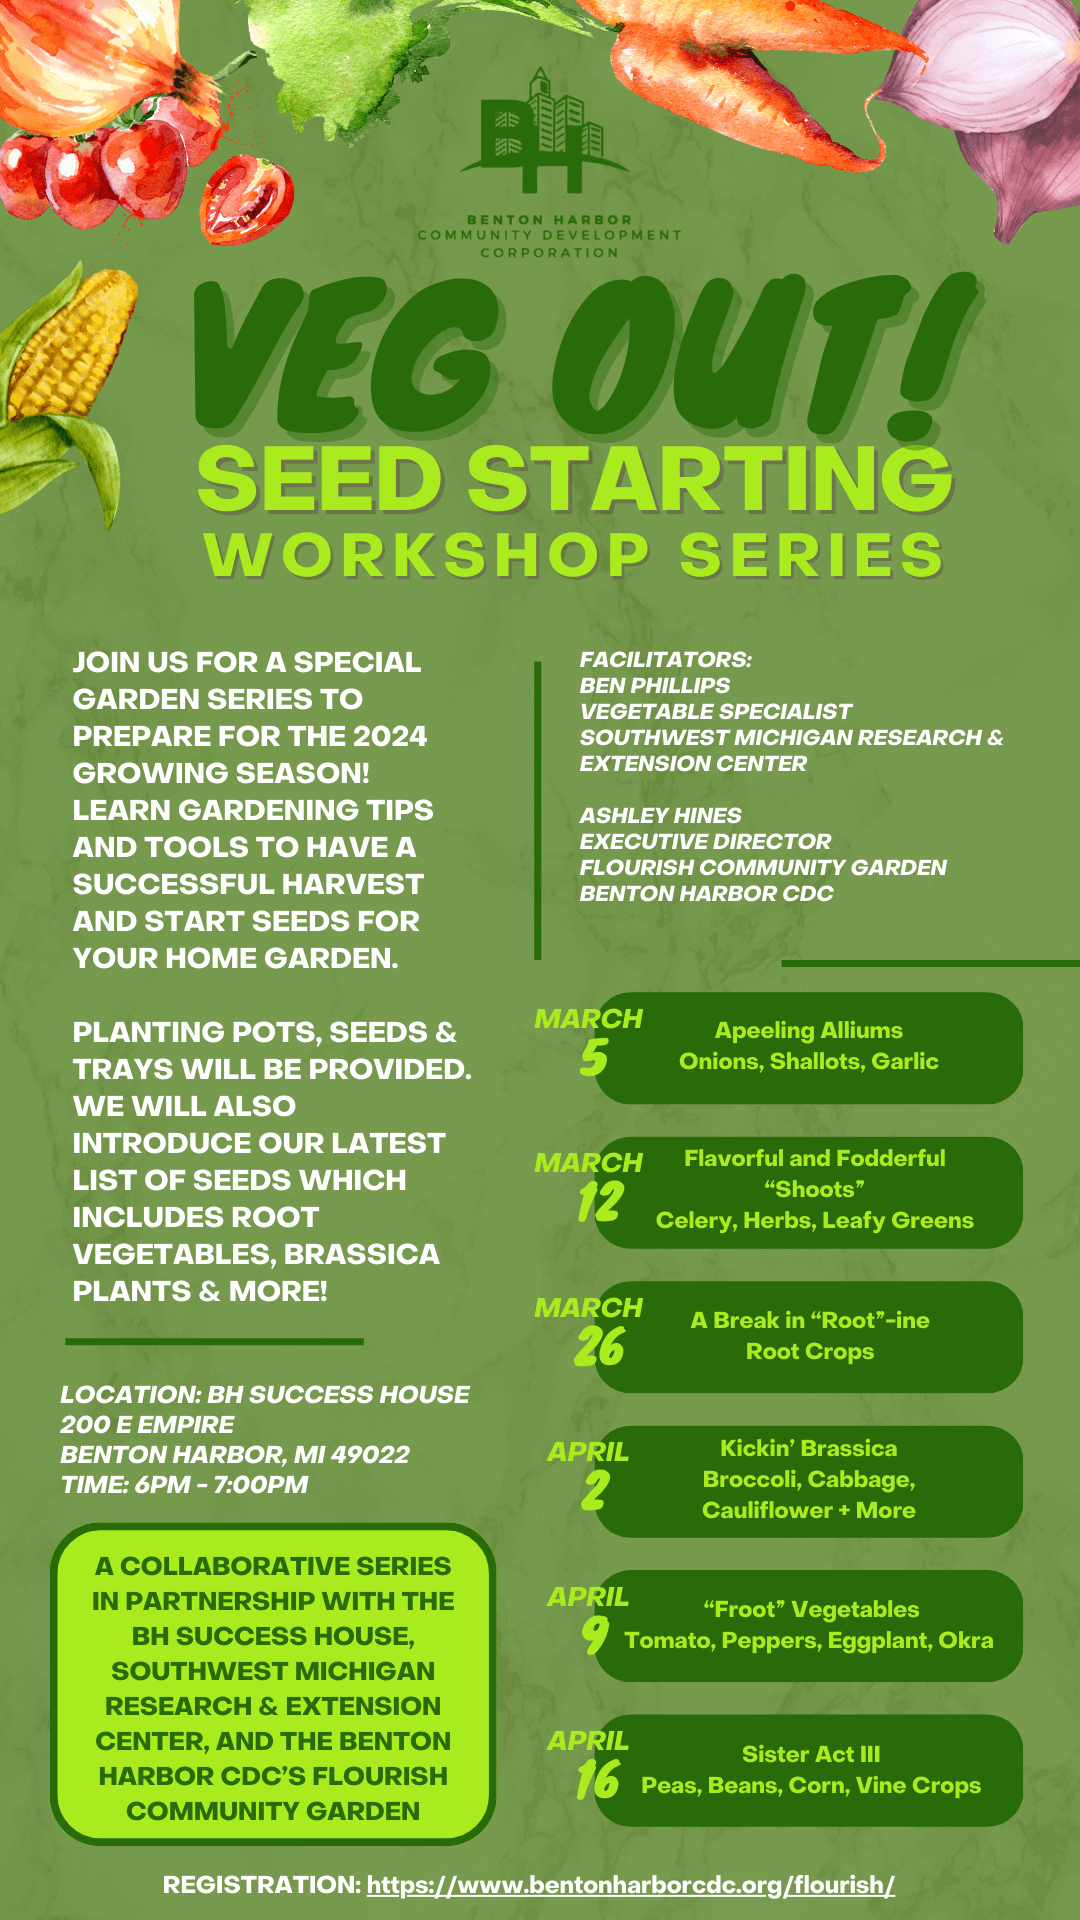 Veg Out Seed Starting Workshop series brochure